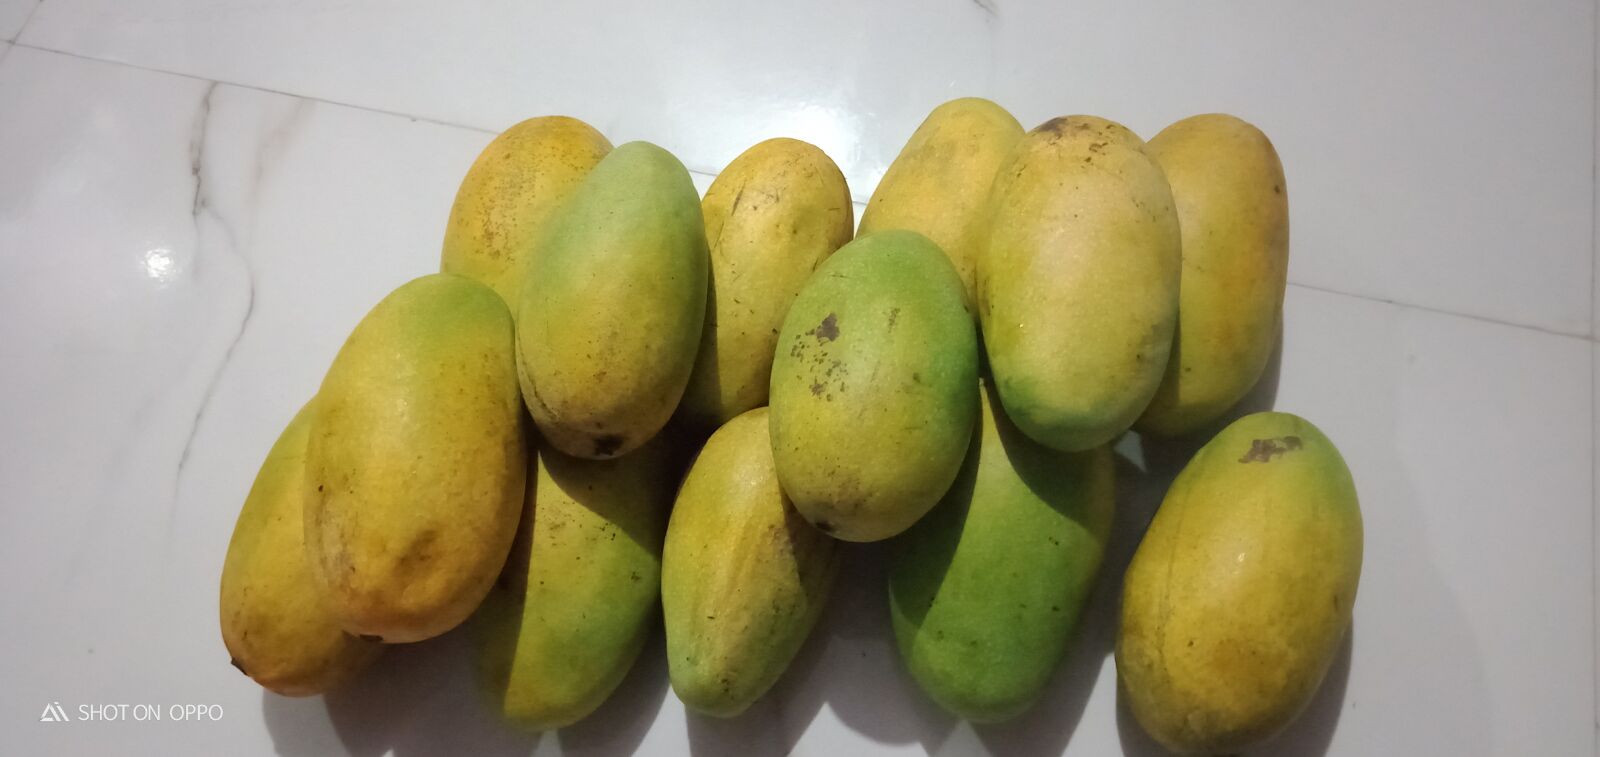 OPPO A5S sample photo. Mangoes, hapus mango, aam photography